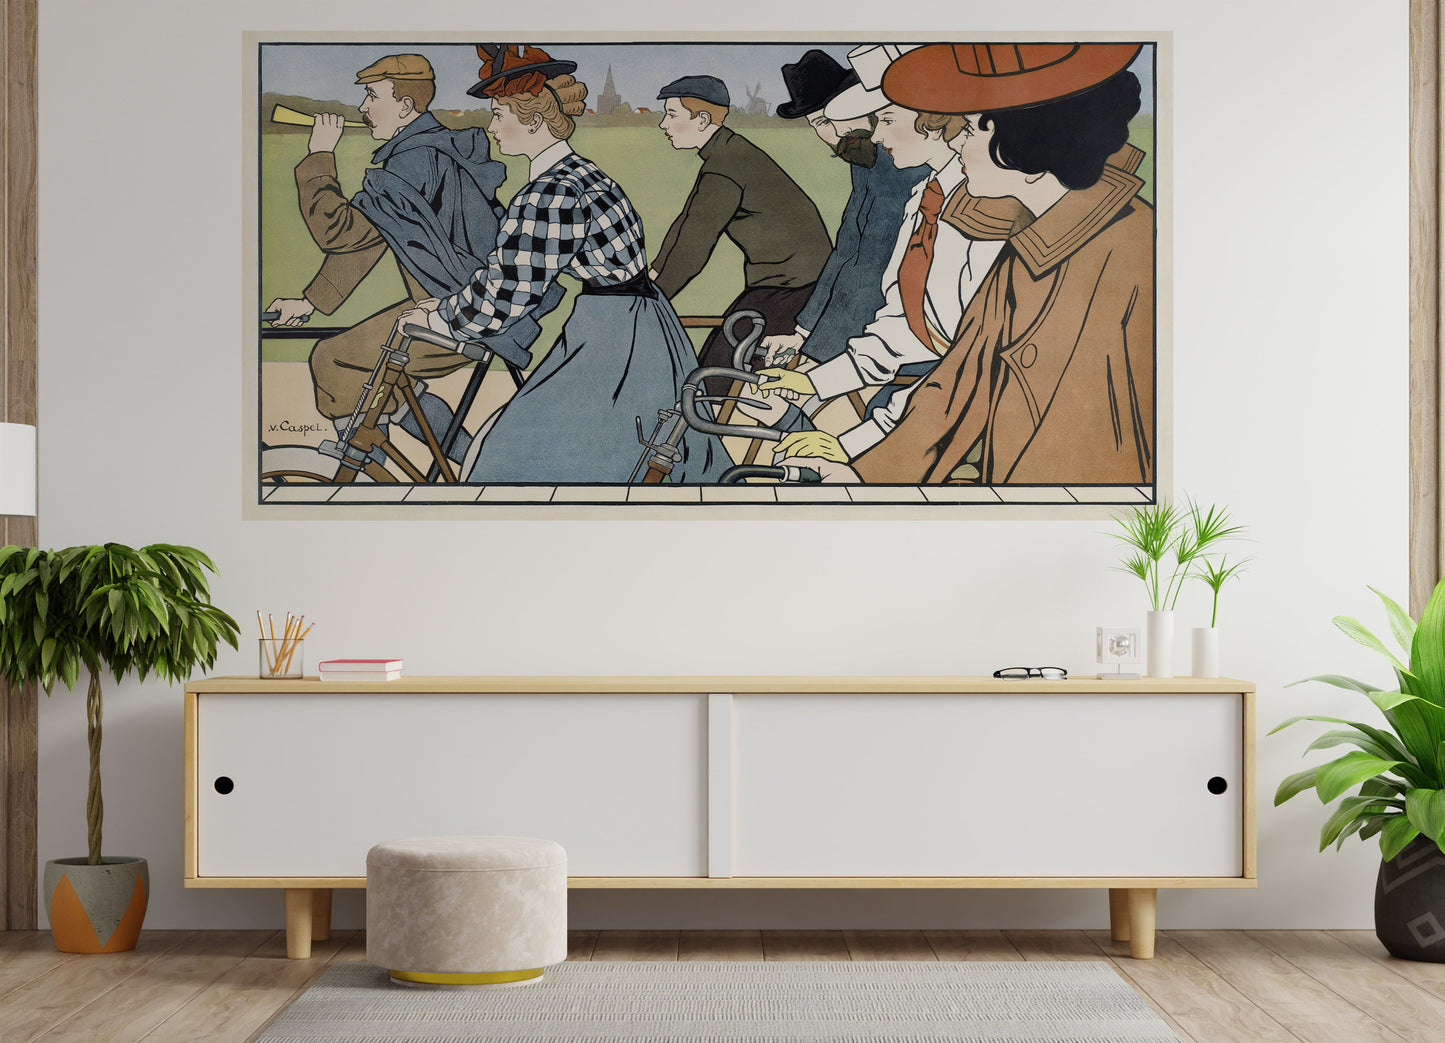 Vintage Hamers Rijwielen Bicycle Artwork Wall Mural. By Johann Georg Can Caspel. Peel and Stick Wallpaper. #6310